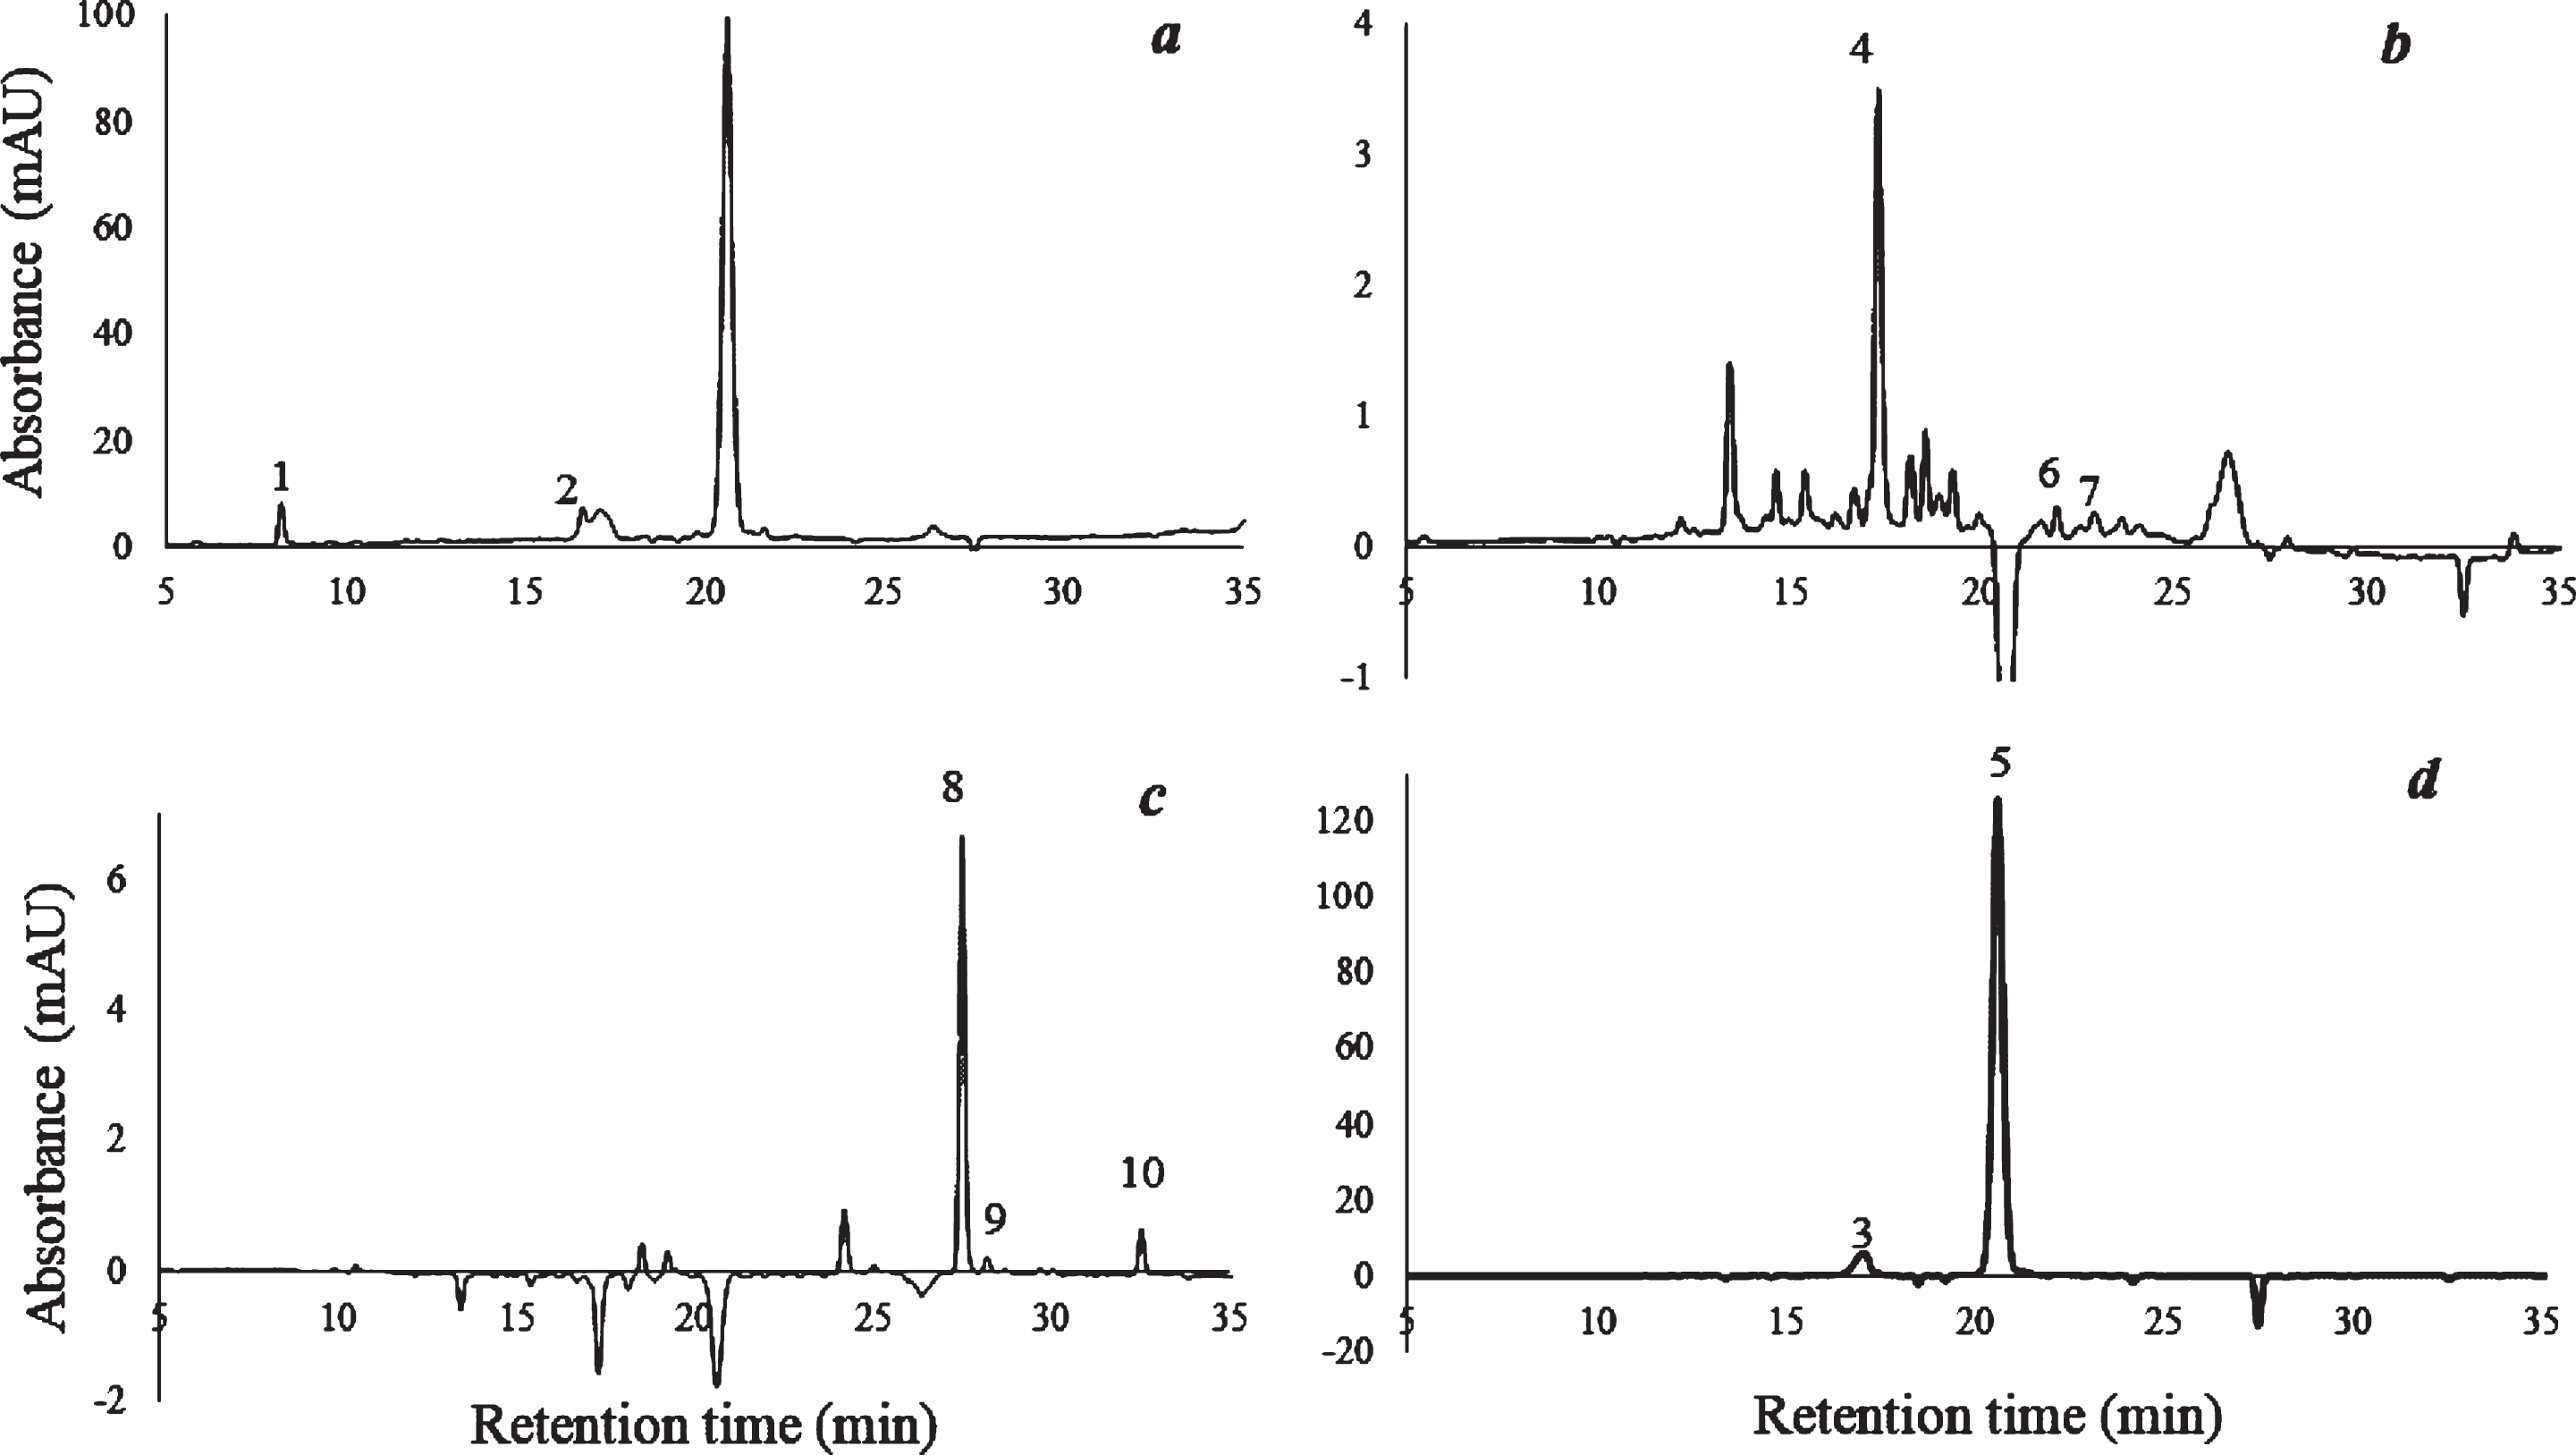 HPLC chromatogram of elderberry fruit. (a) 280 nm, signal A; (b) 323 nm, signal B; (c) 365 nm, signal C; (d) 520 nm, signal D. The peaks correspond to: 1. Gallic acid, 2. Catechin, 3. Cyanidin diglucoside (presumed), 4. Chlorogenic acid, 5. Cyanidin monoglycosides, 6. p-Cumaric acid, 7. Ferulic acid, 8. Quercetin-3-rutinoside (Rutin), 9. Ellagic acid, 10. Quercetin.